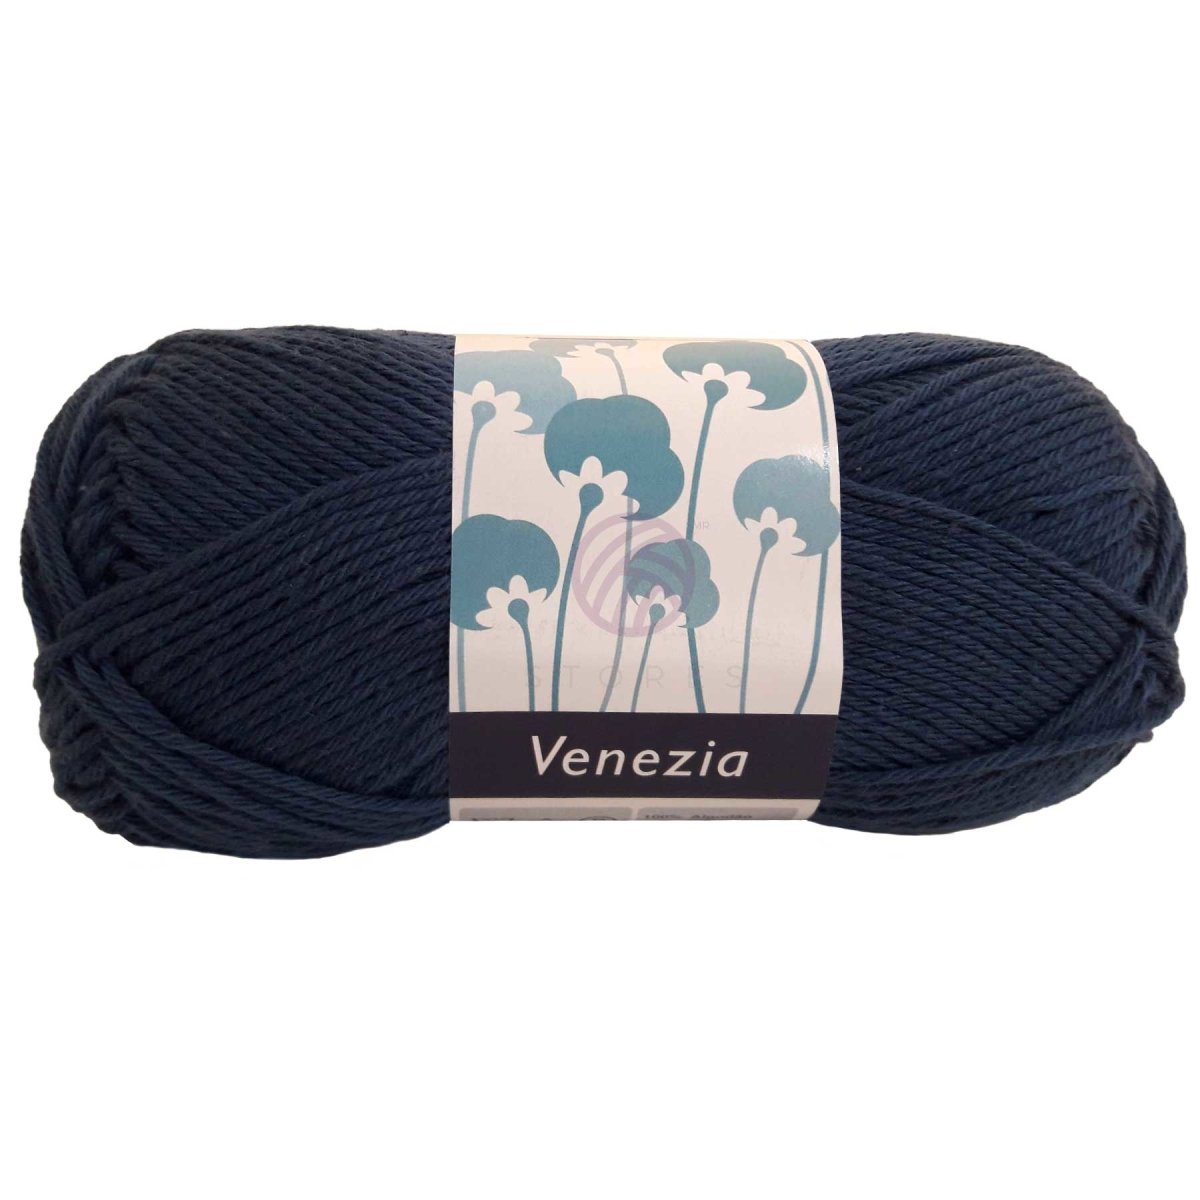 VENEZIA - Crochetstores204-095606850204091